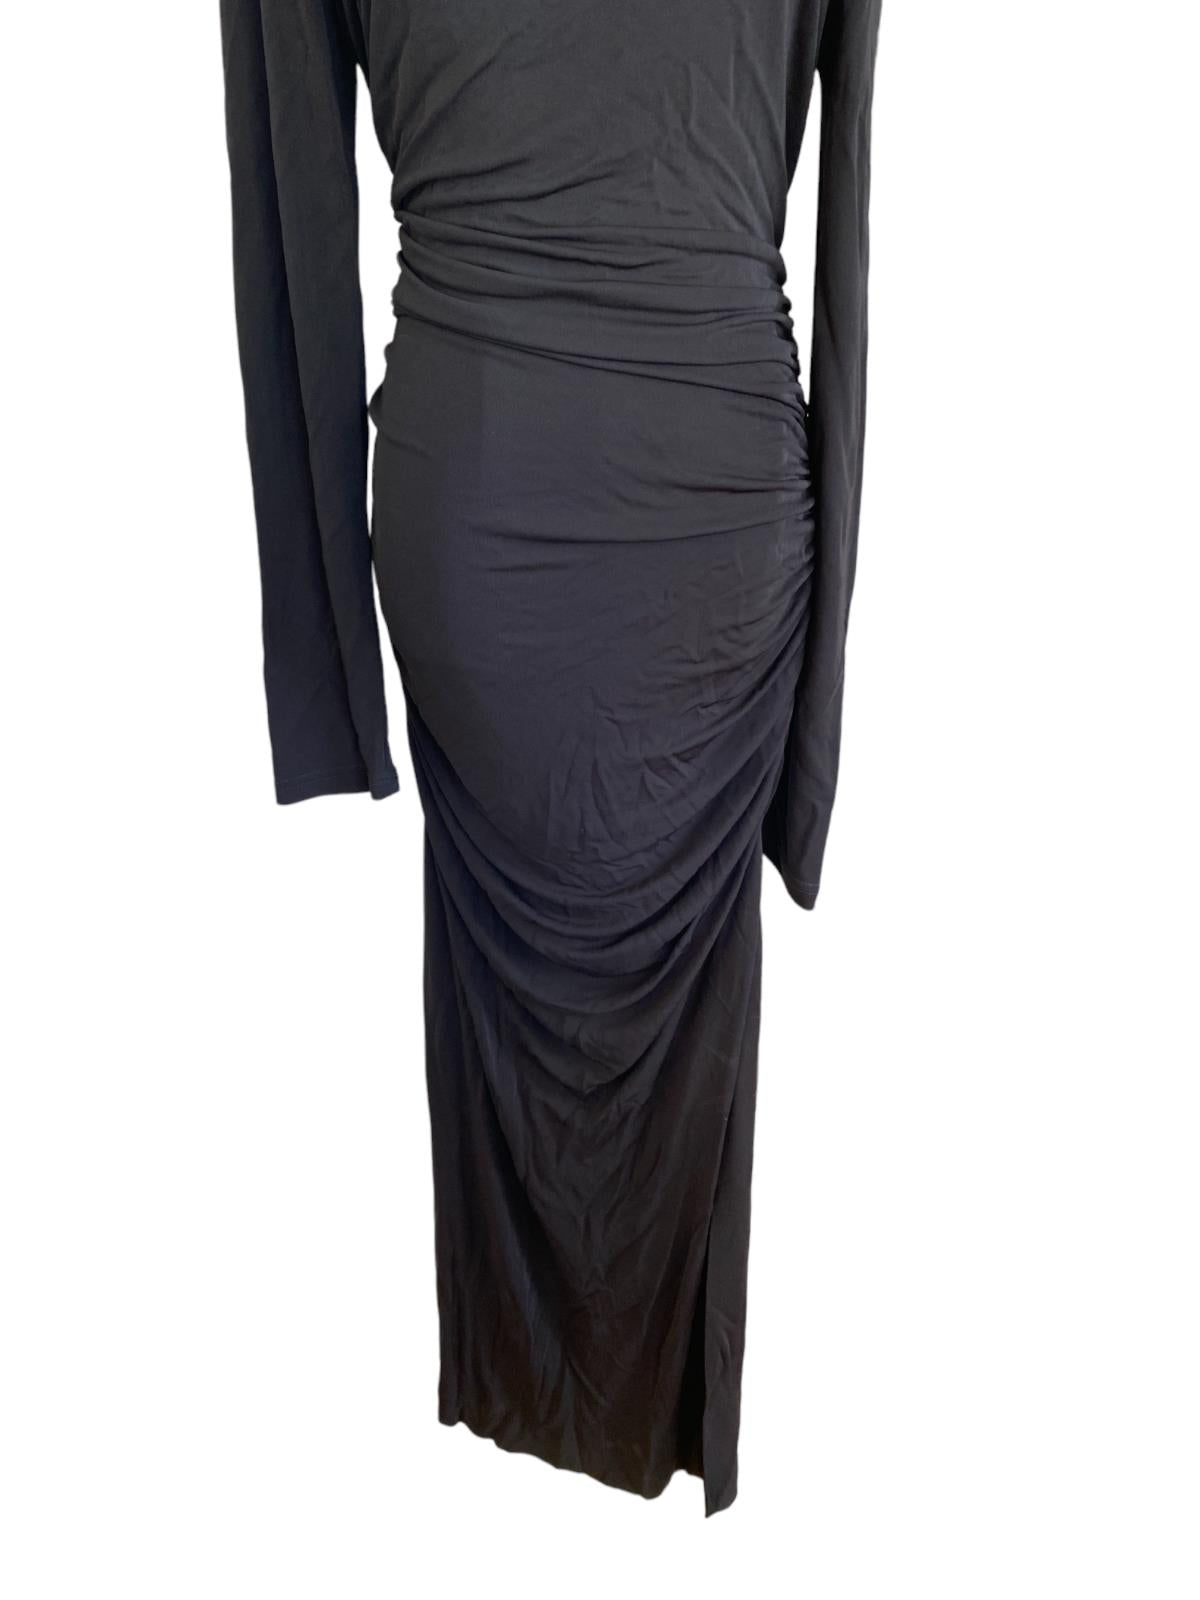 CUE Slinky Maxi Black Dress | Size 14, Gathered, Side Slits, Stretch, Formal